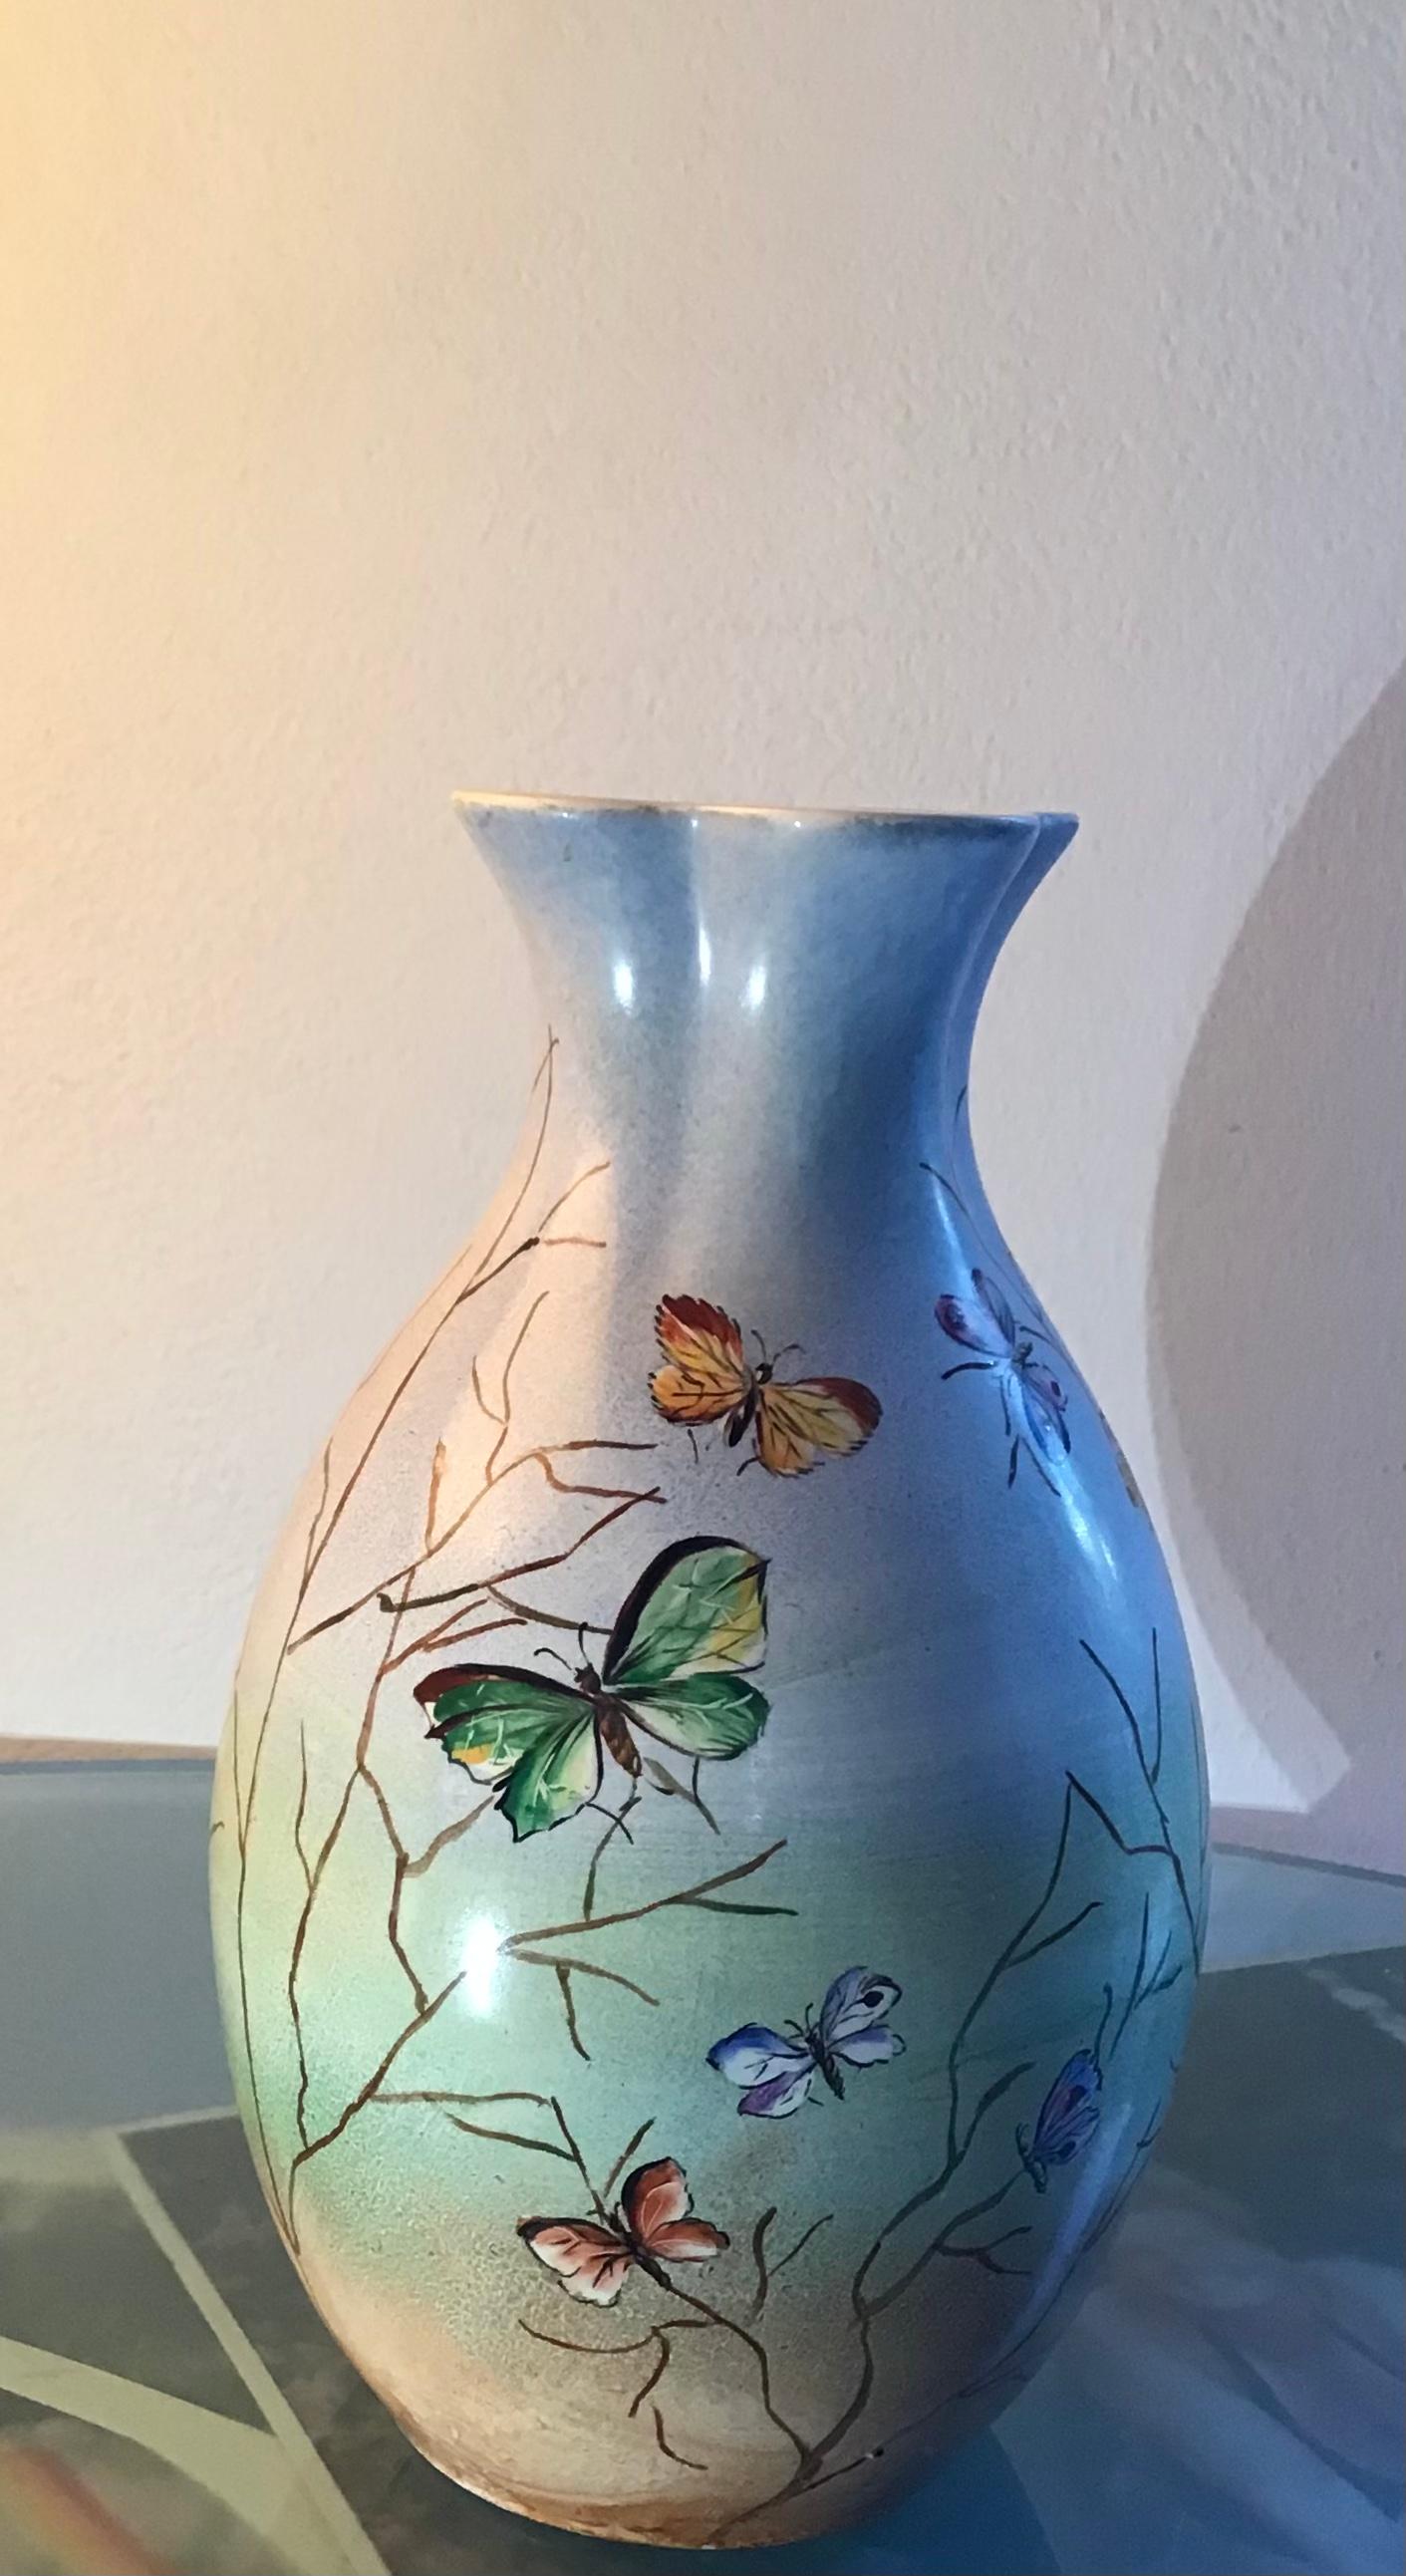 Other Lavenia “Guido Andlovitz “Vase Ceramic 1940 Italy For Sale